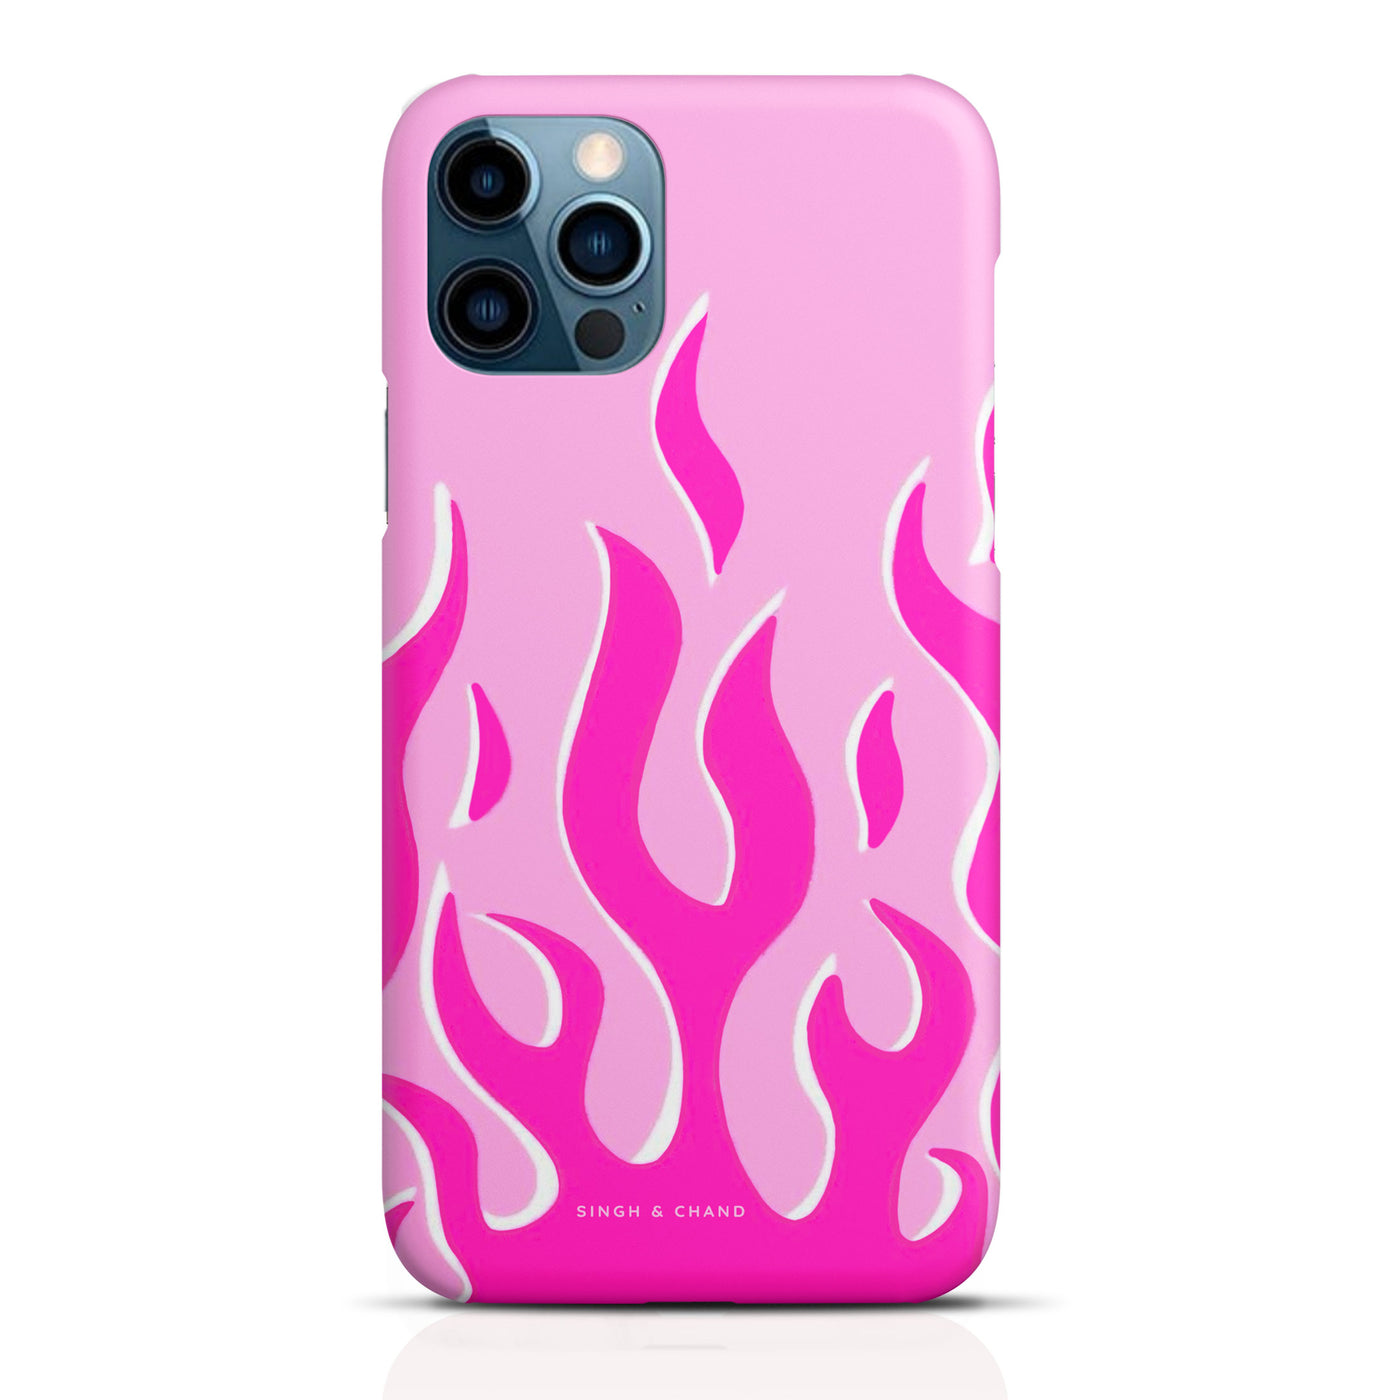 Barbie theme flame Matt Phone Case